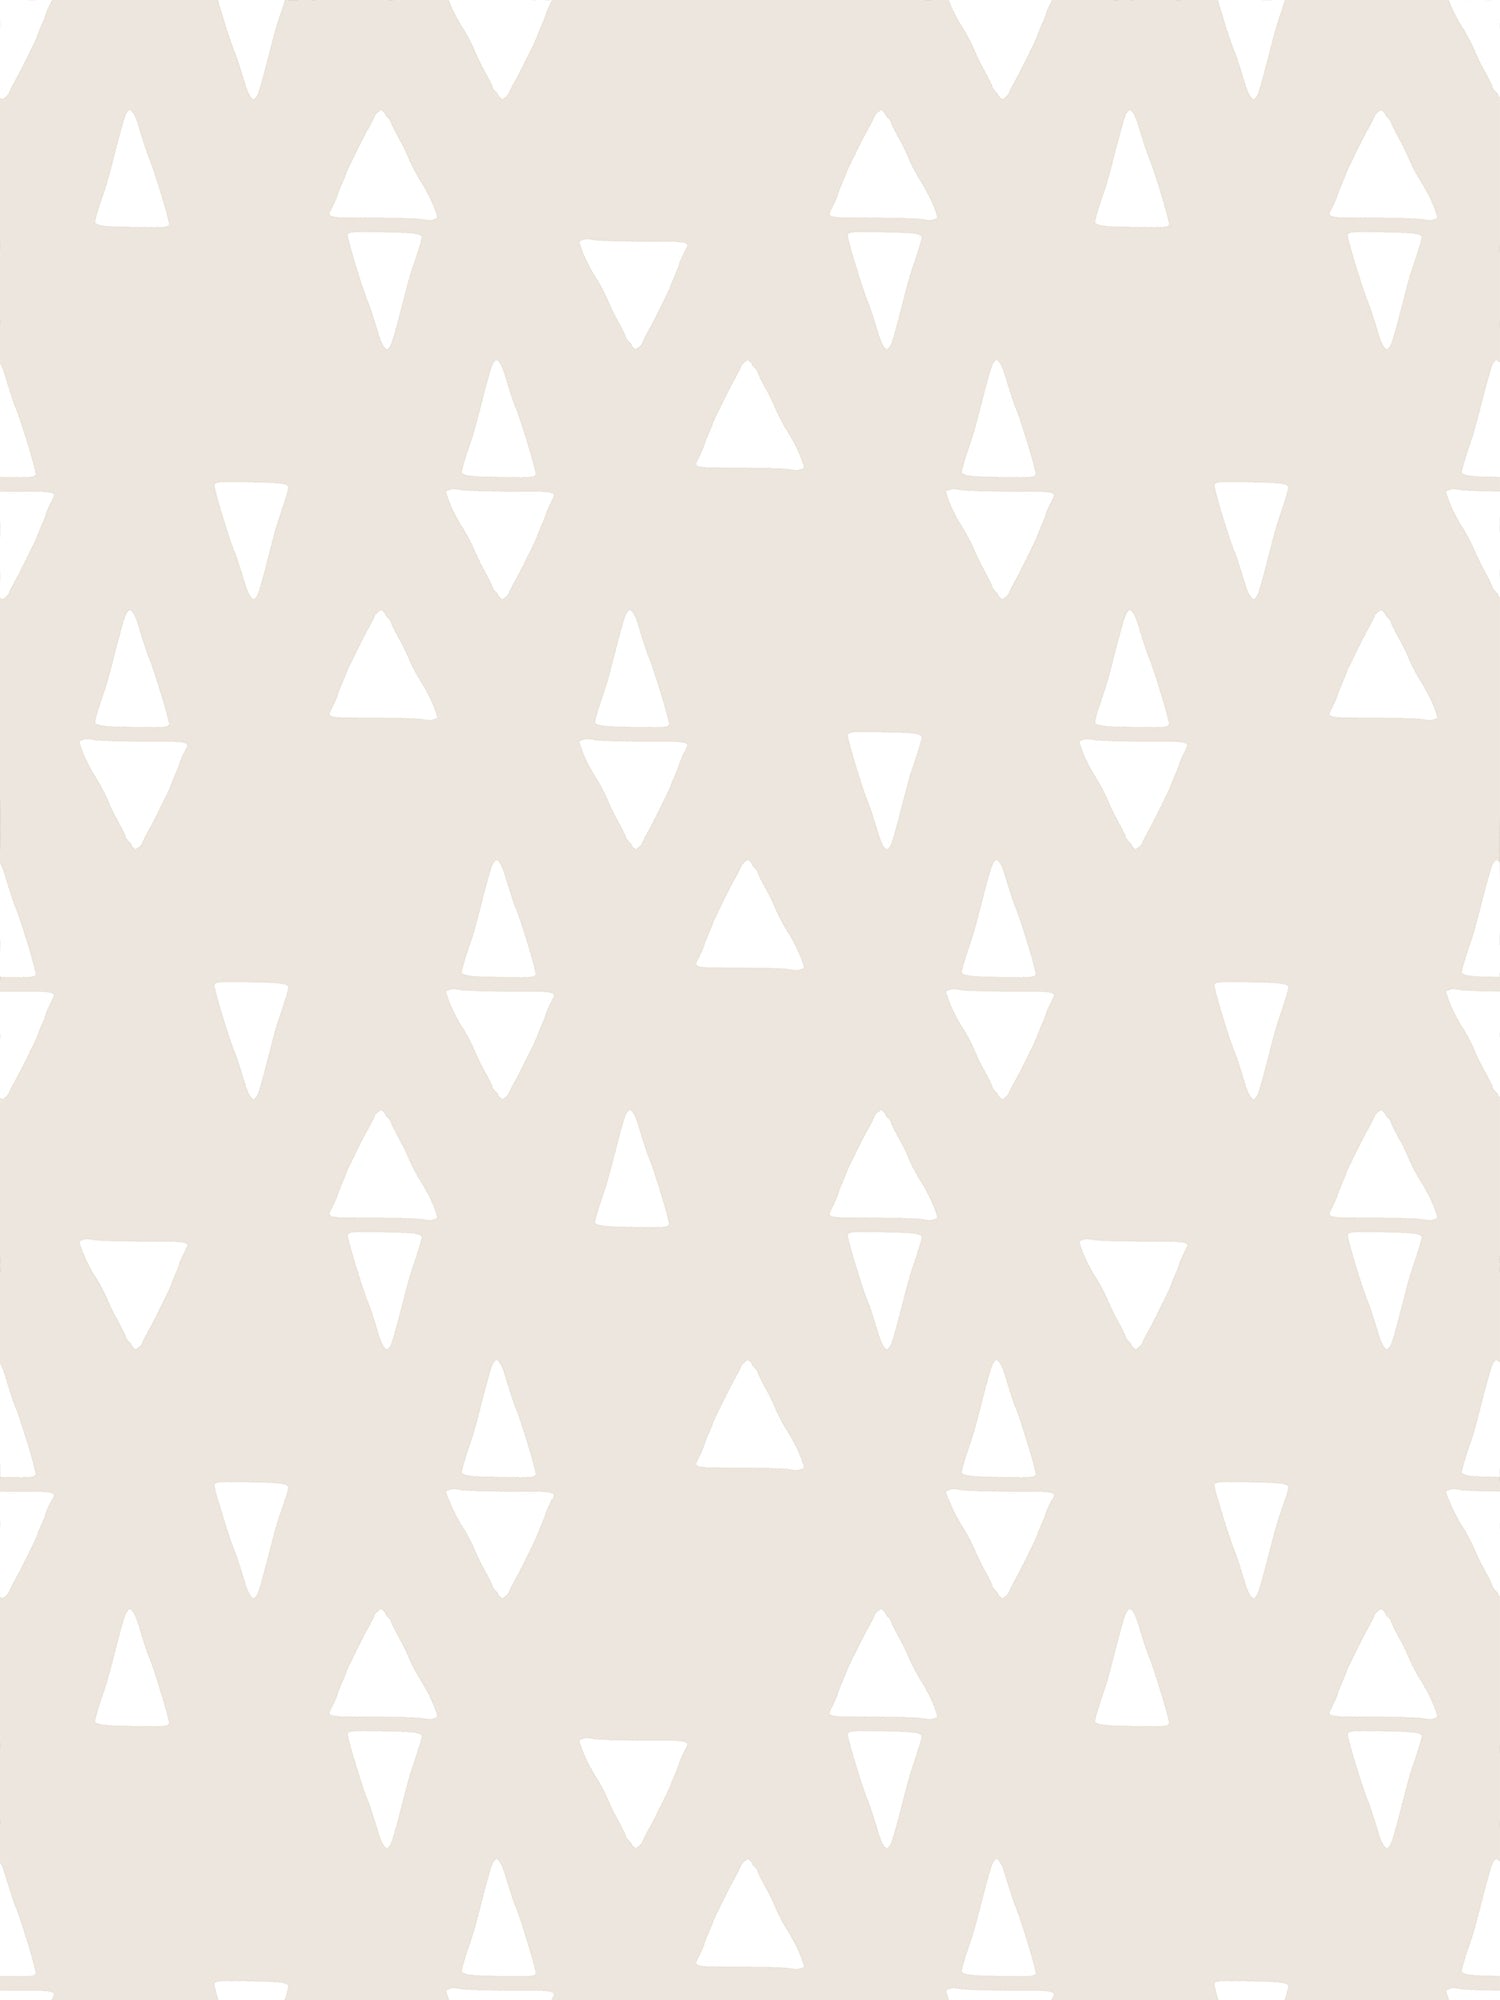 Nude & White Scandi Geometric Triangle Pattern Wallpaper Artwork by WallpaperMural